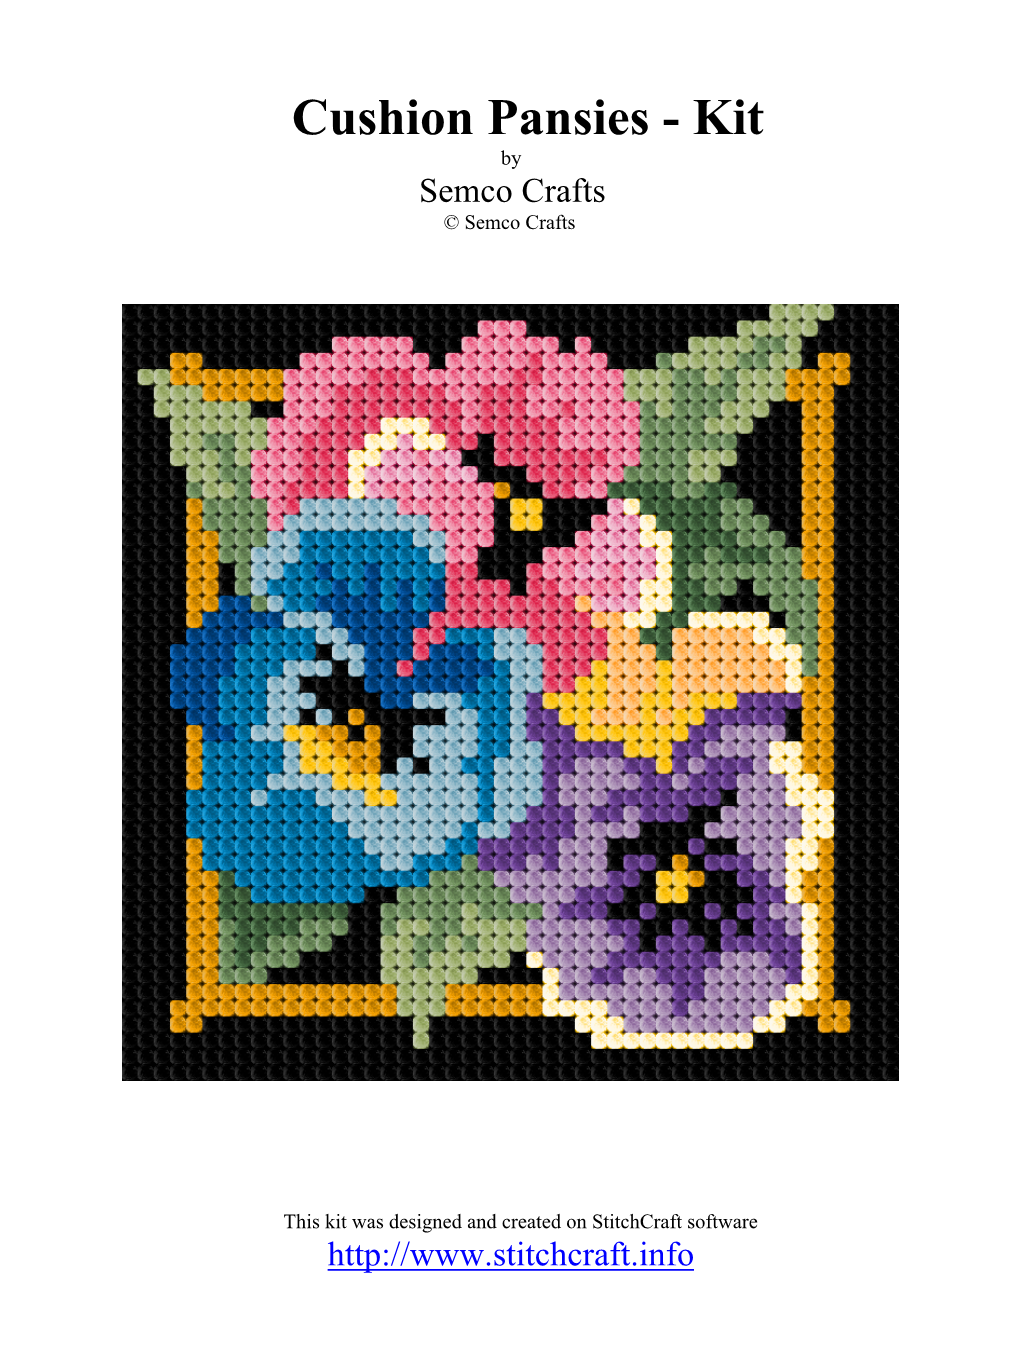 Cushion Pansies - Kit by Semco Crafts © Semco Crafts